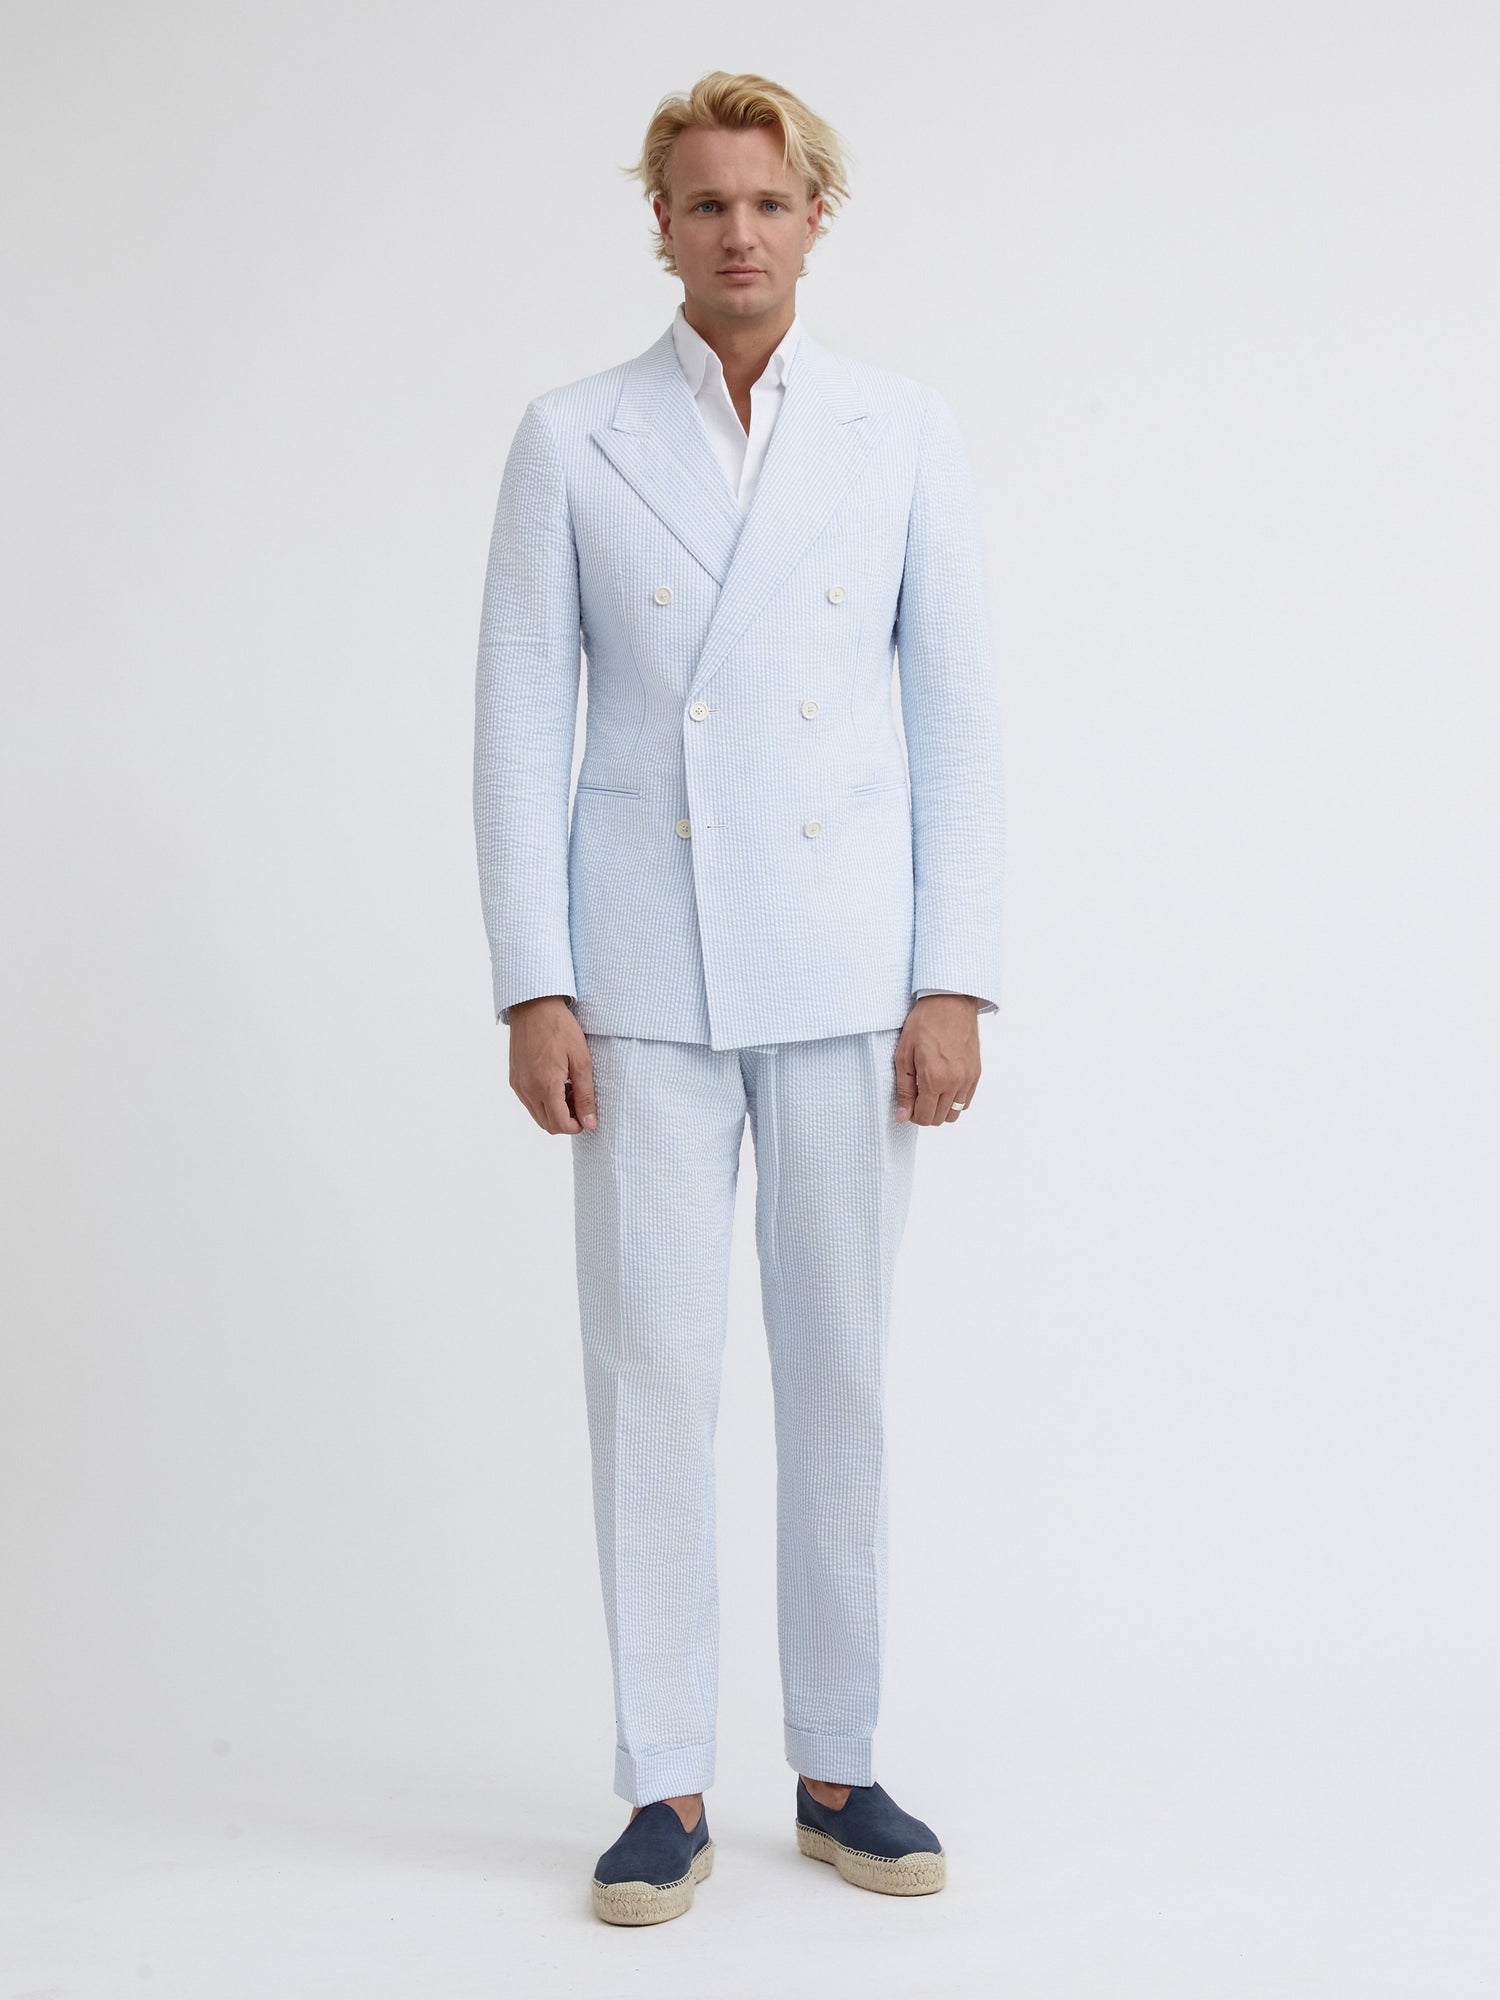 White Blue Striped Seersucker Suit - Grand Le Mar